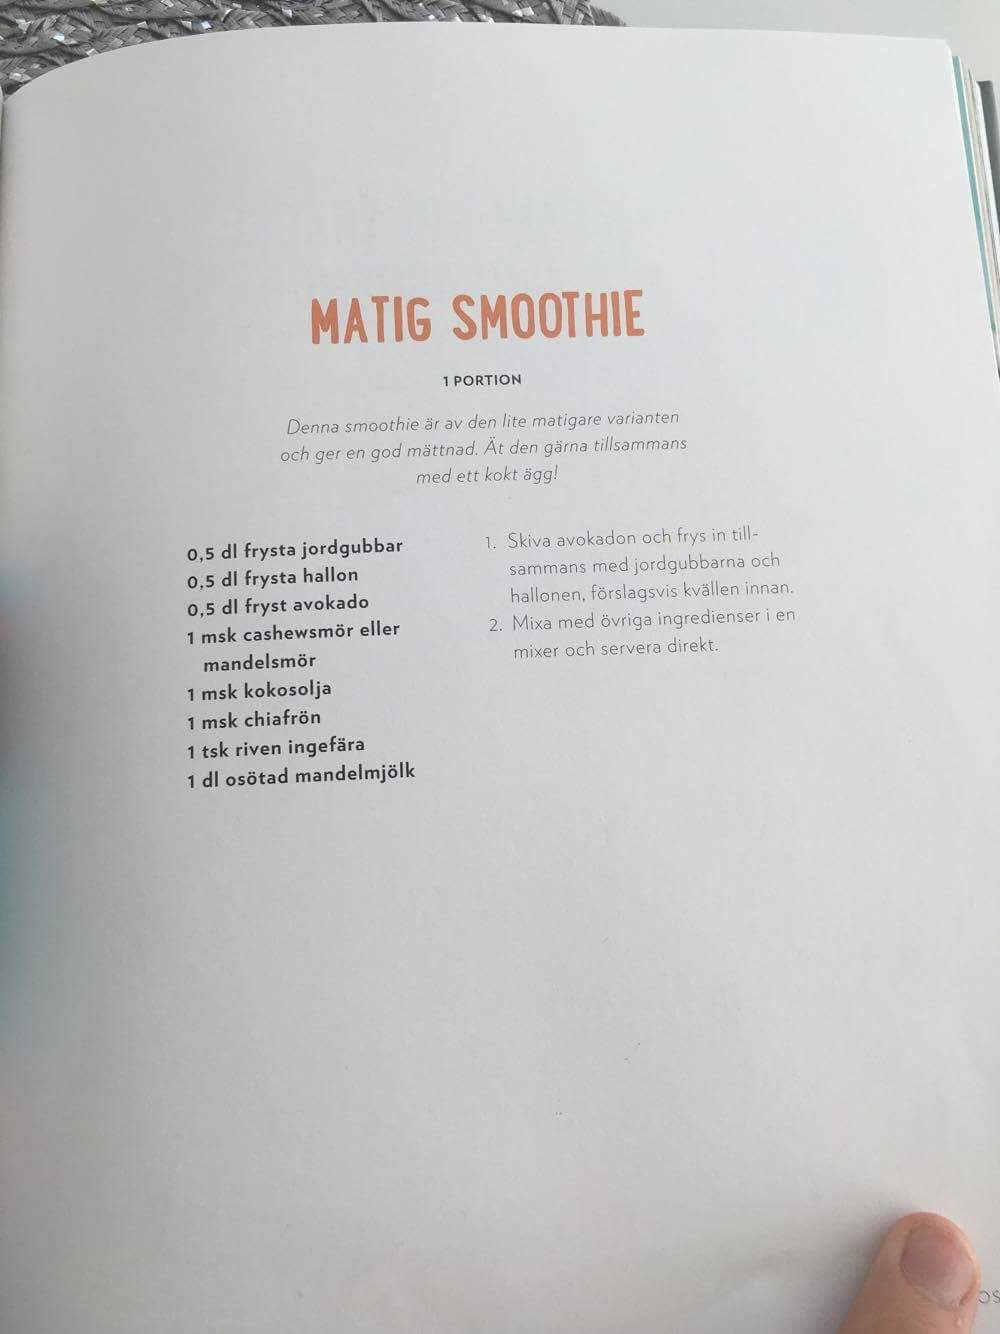 Matig smoothie